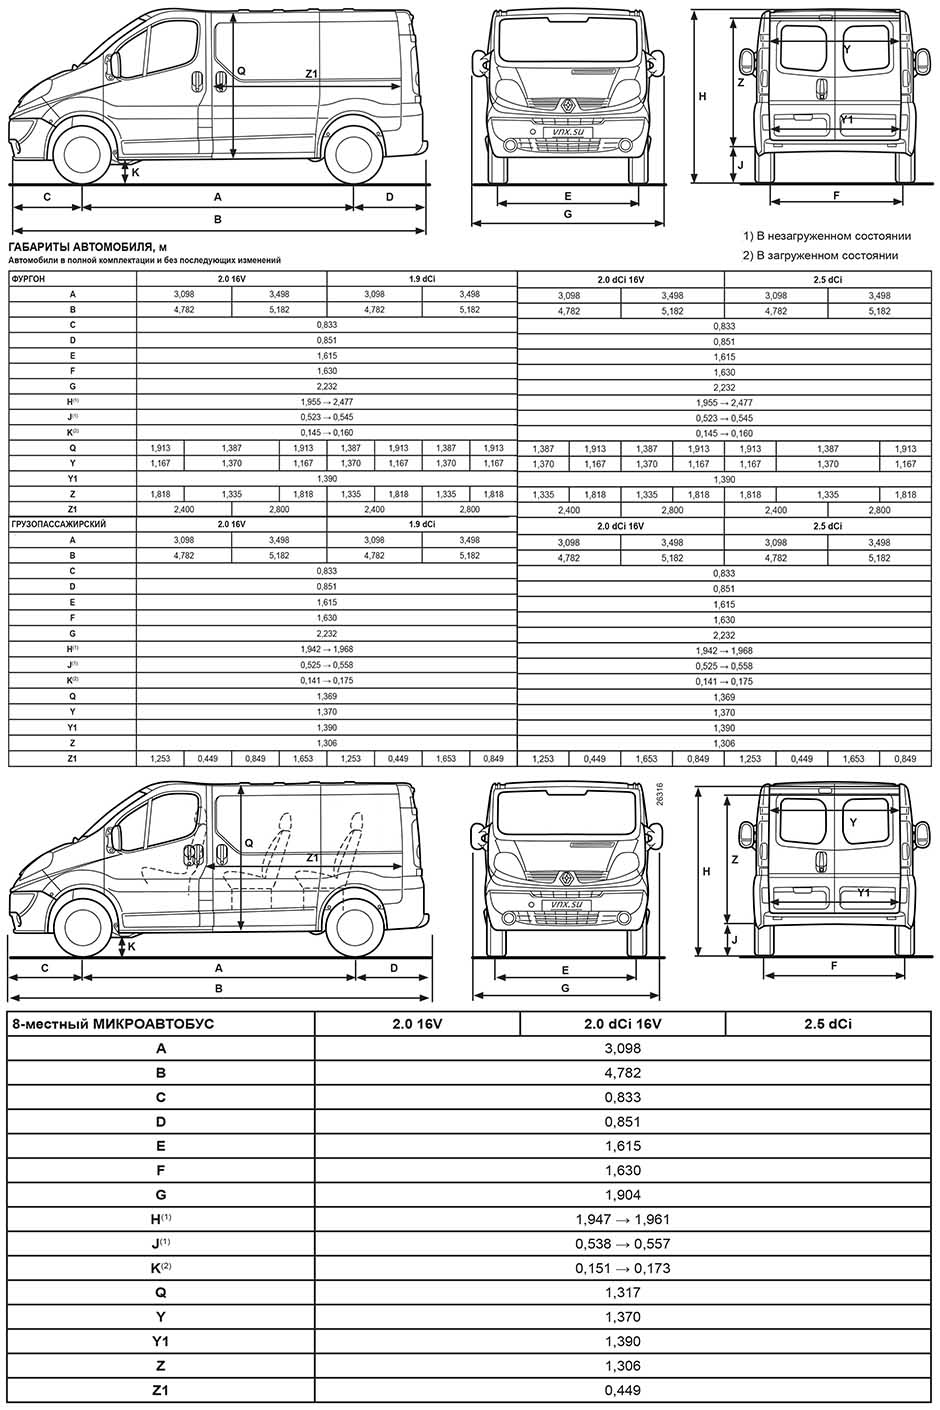 Габаритные размеры Рено Трафик 2001-2014 (dimensions Trafic Mark II)